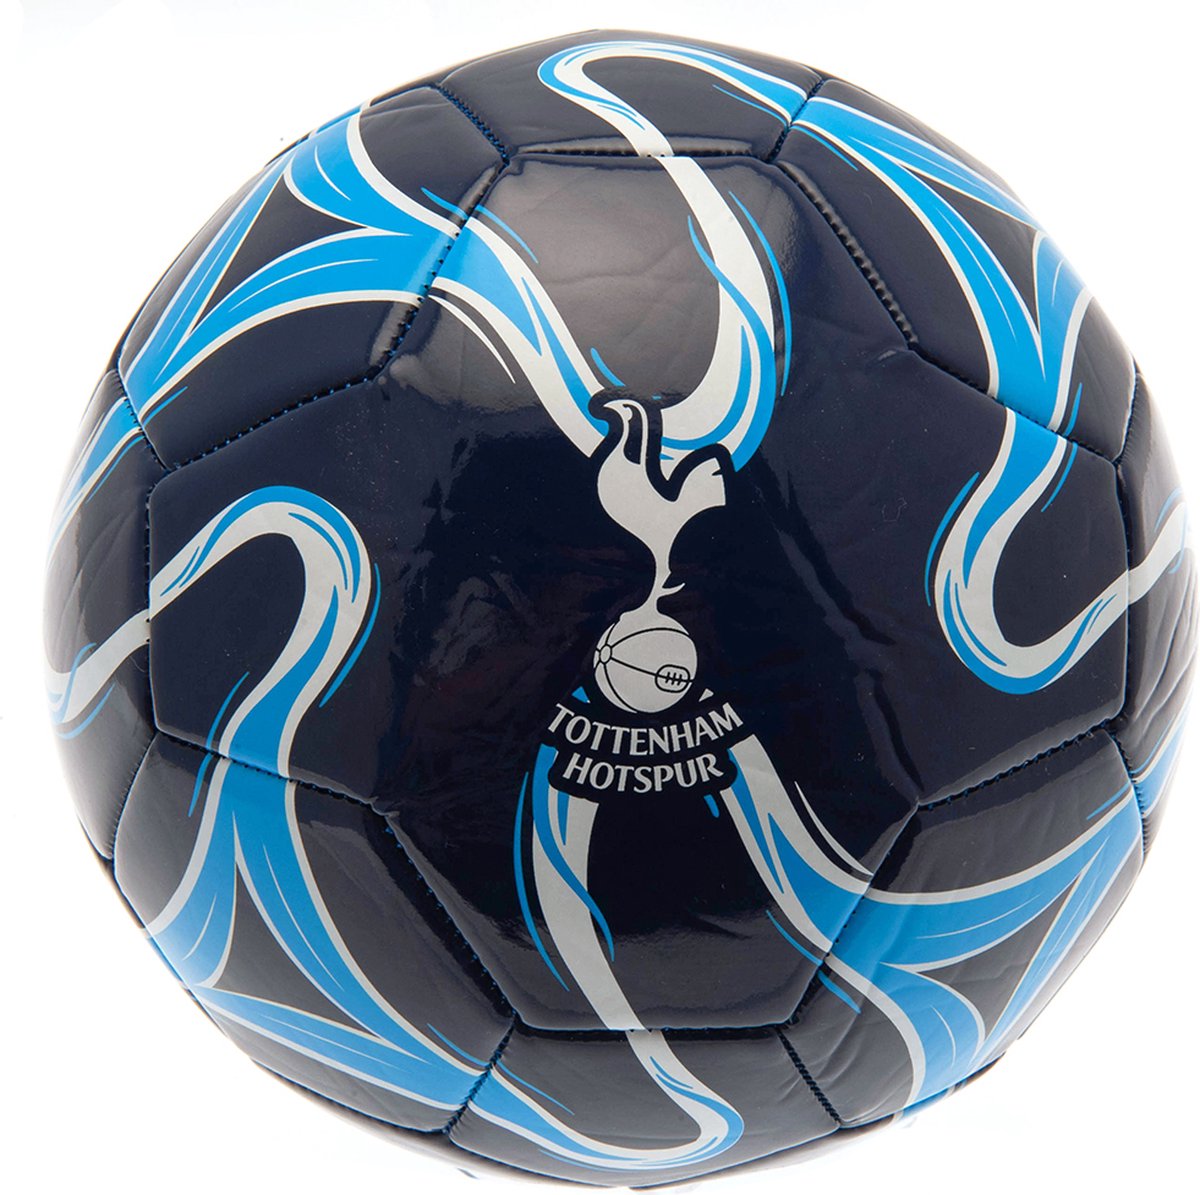 Tottenham voetbal CC - maat 5 - blauw